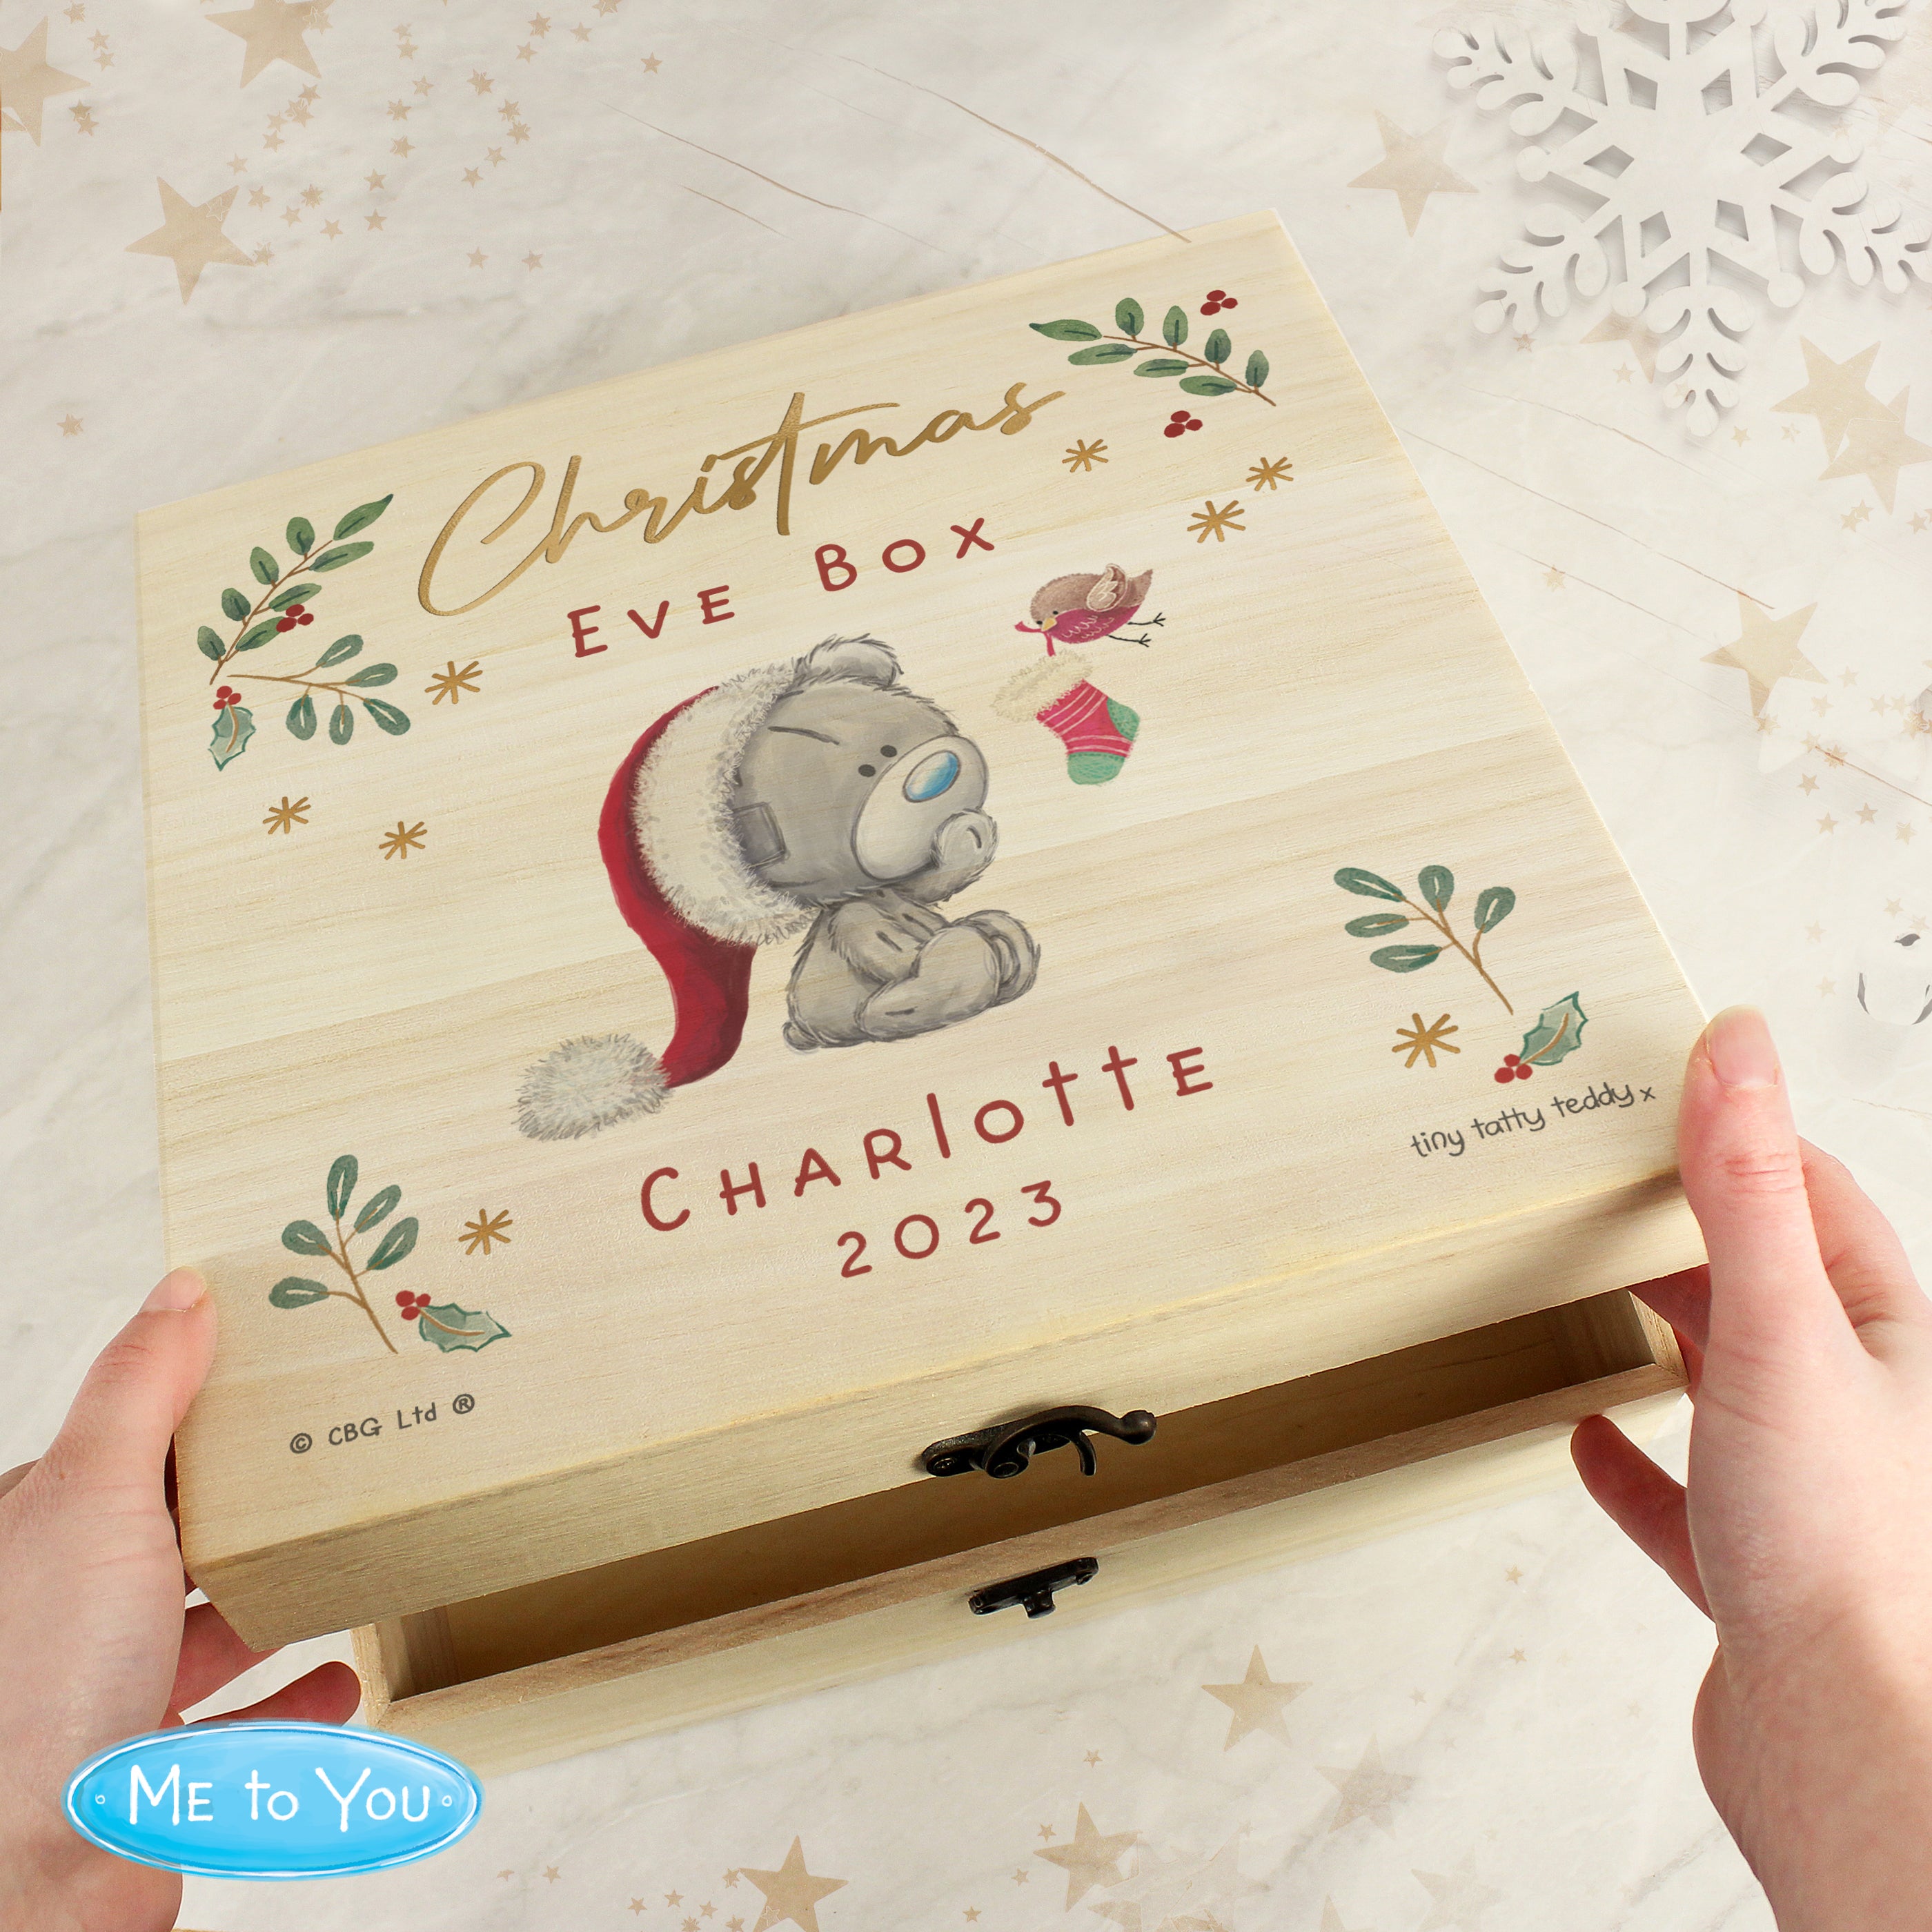 Personalised Christmas Eve box - Tiny Tatty Teddy